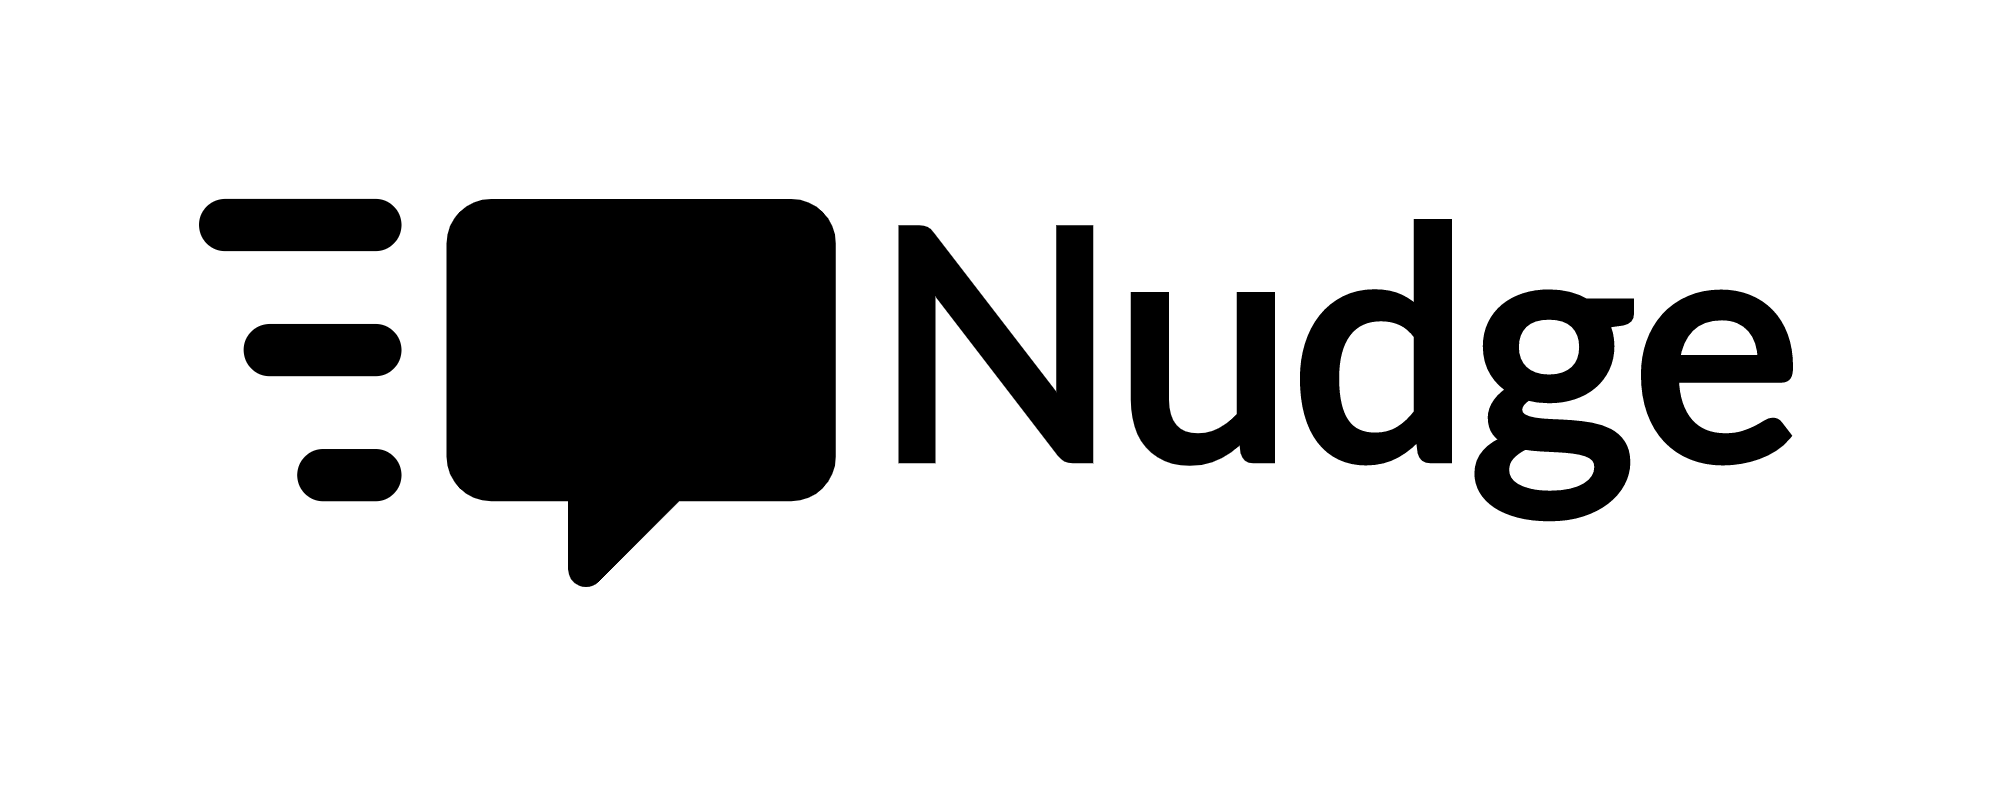 Nudge logo black